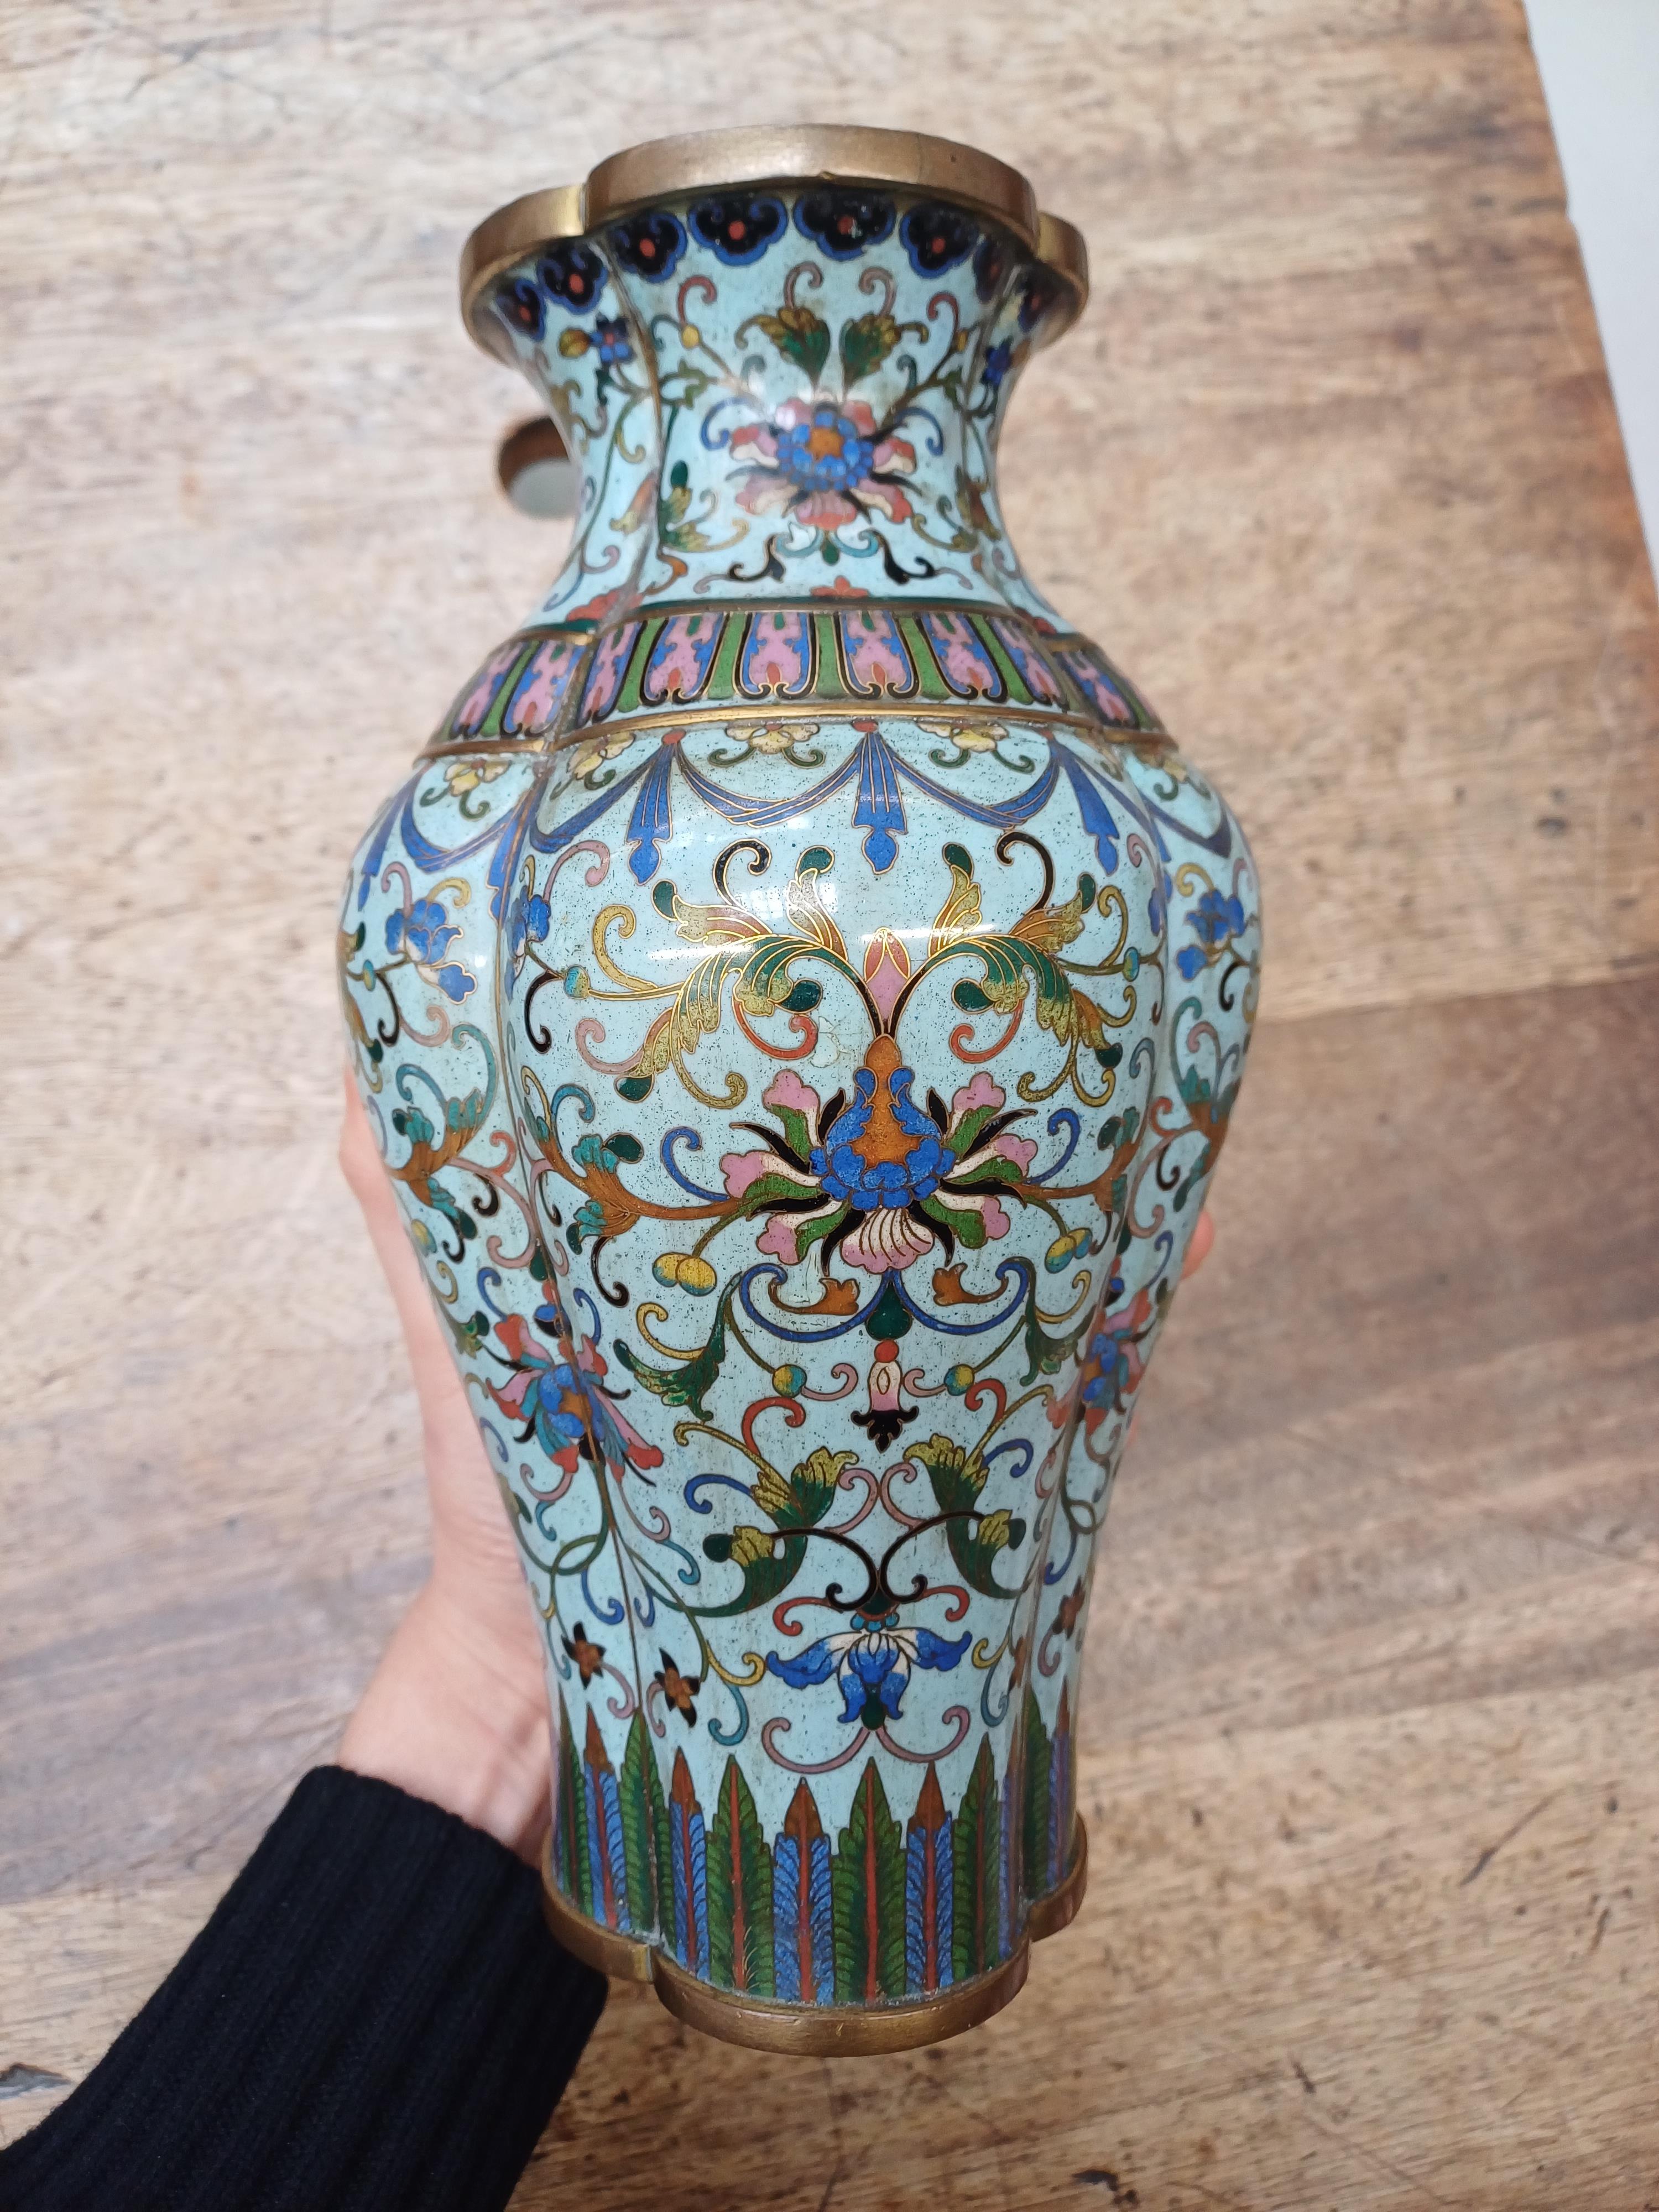 A PAIR OF CHINESE CLOISONNÉ ENAMEL VASES 清十八世紀 銅胎掐絲琺瑯番蓮紋瓶一對 - Image 12 of 17